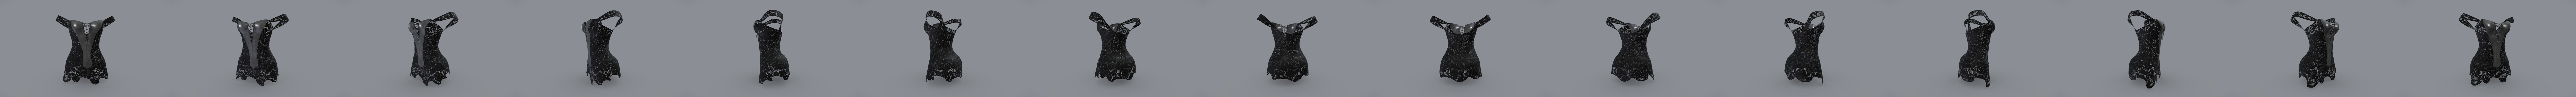 3D model Long Sleeves Off Shoulder Laces Up Dystopian Black Corset